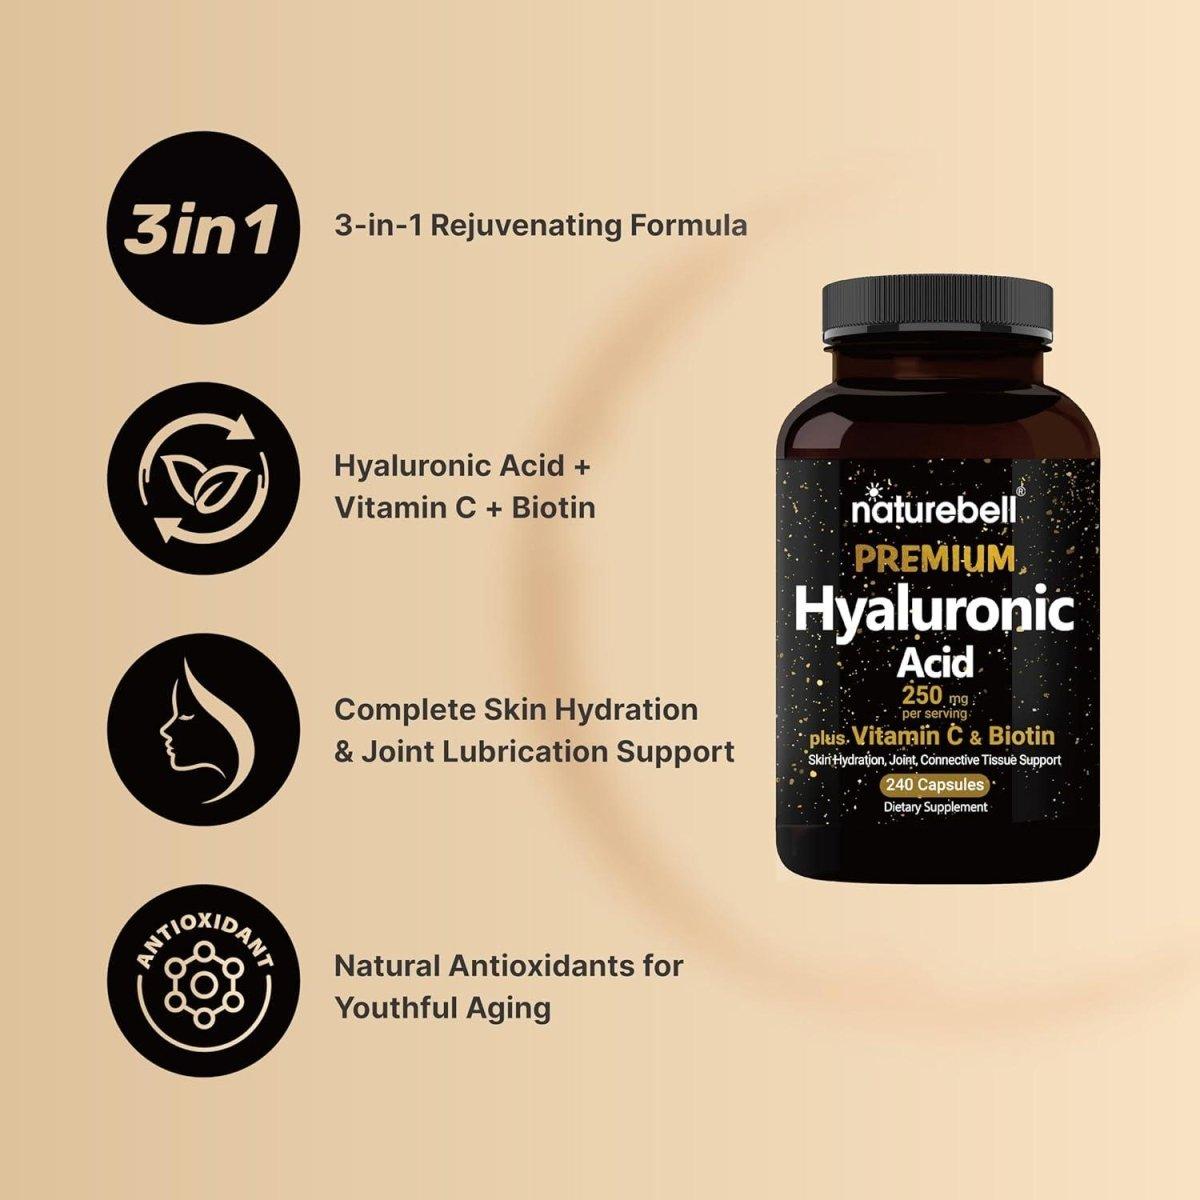 NatureBell Premium Hyaluronic Acid Supplements 250mg per serving (240 Capsules) - Glam Global UK